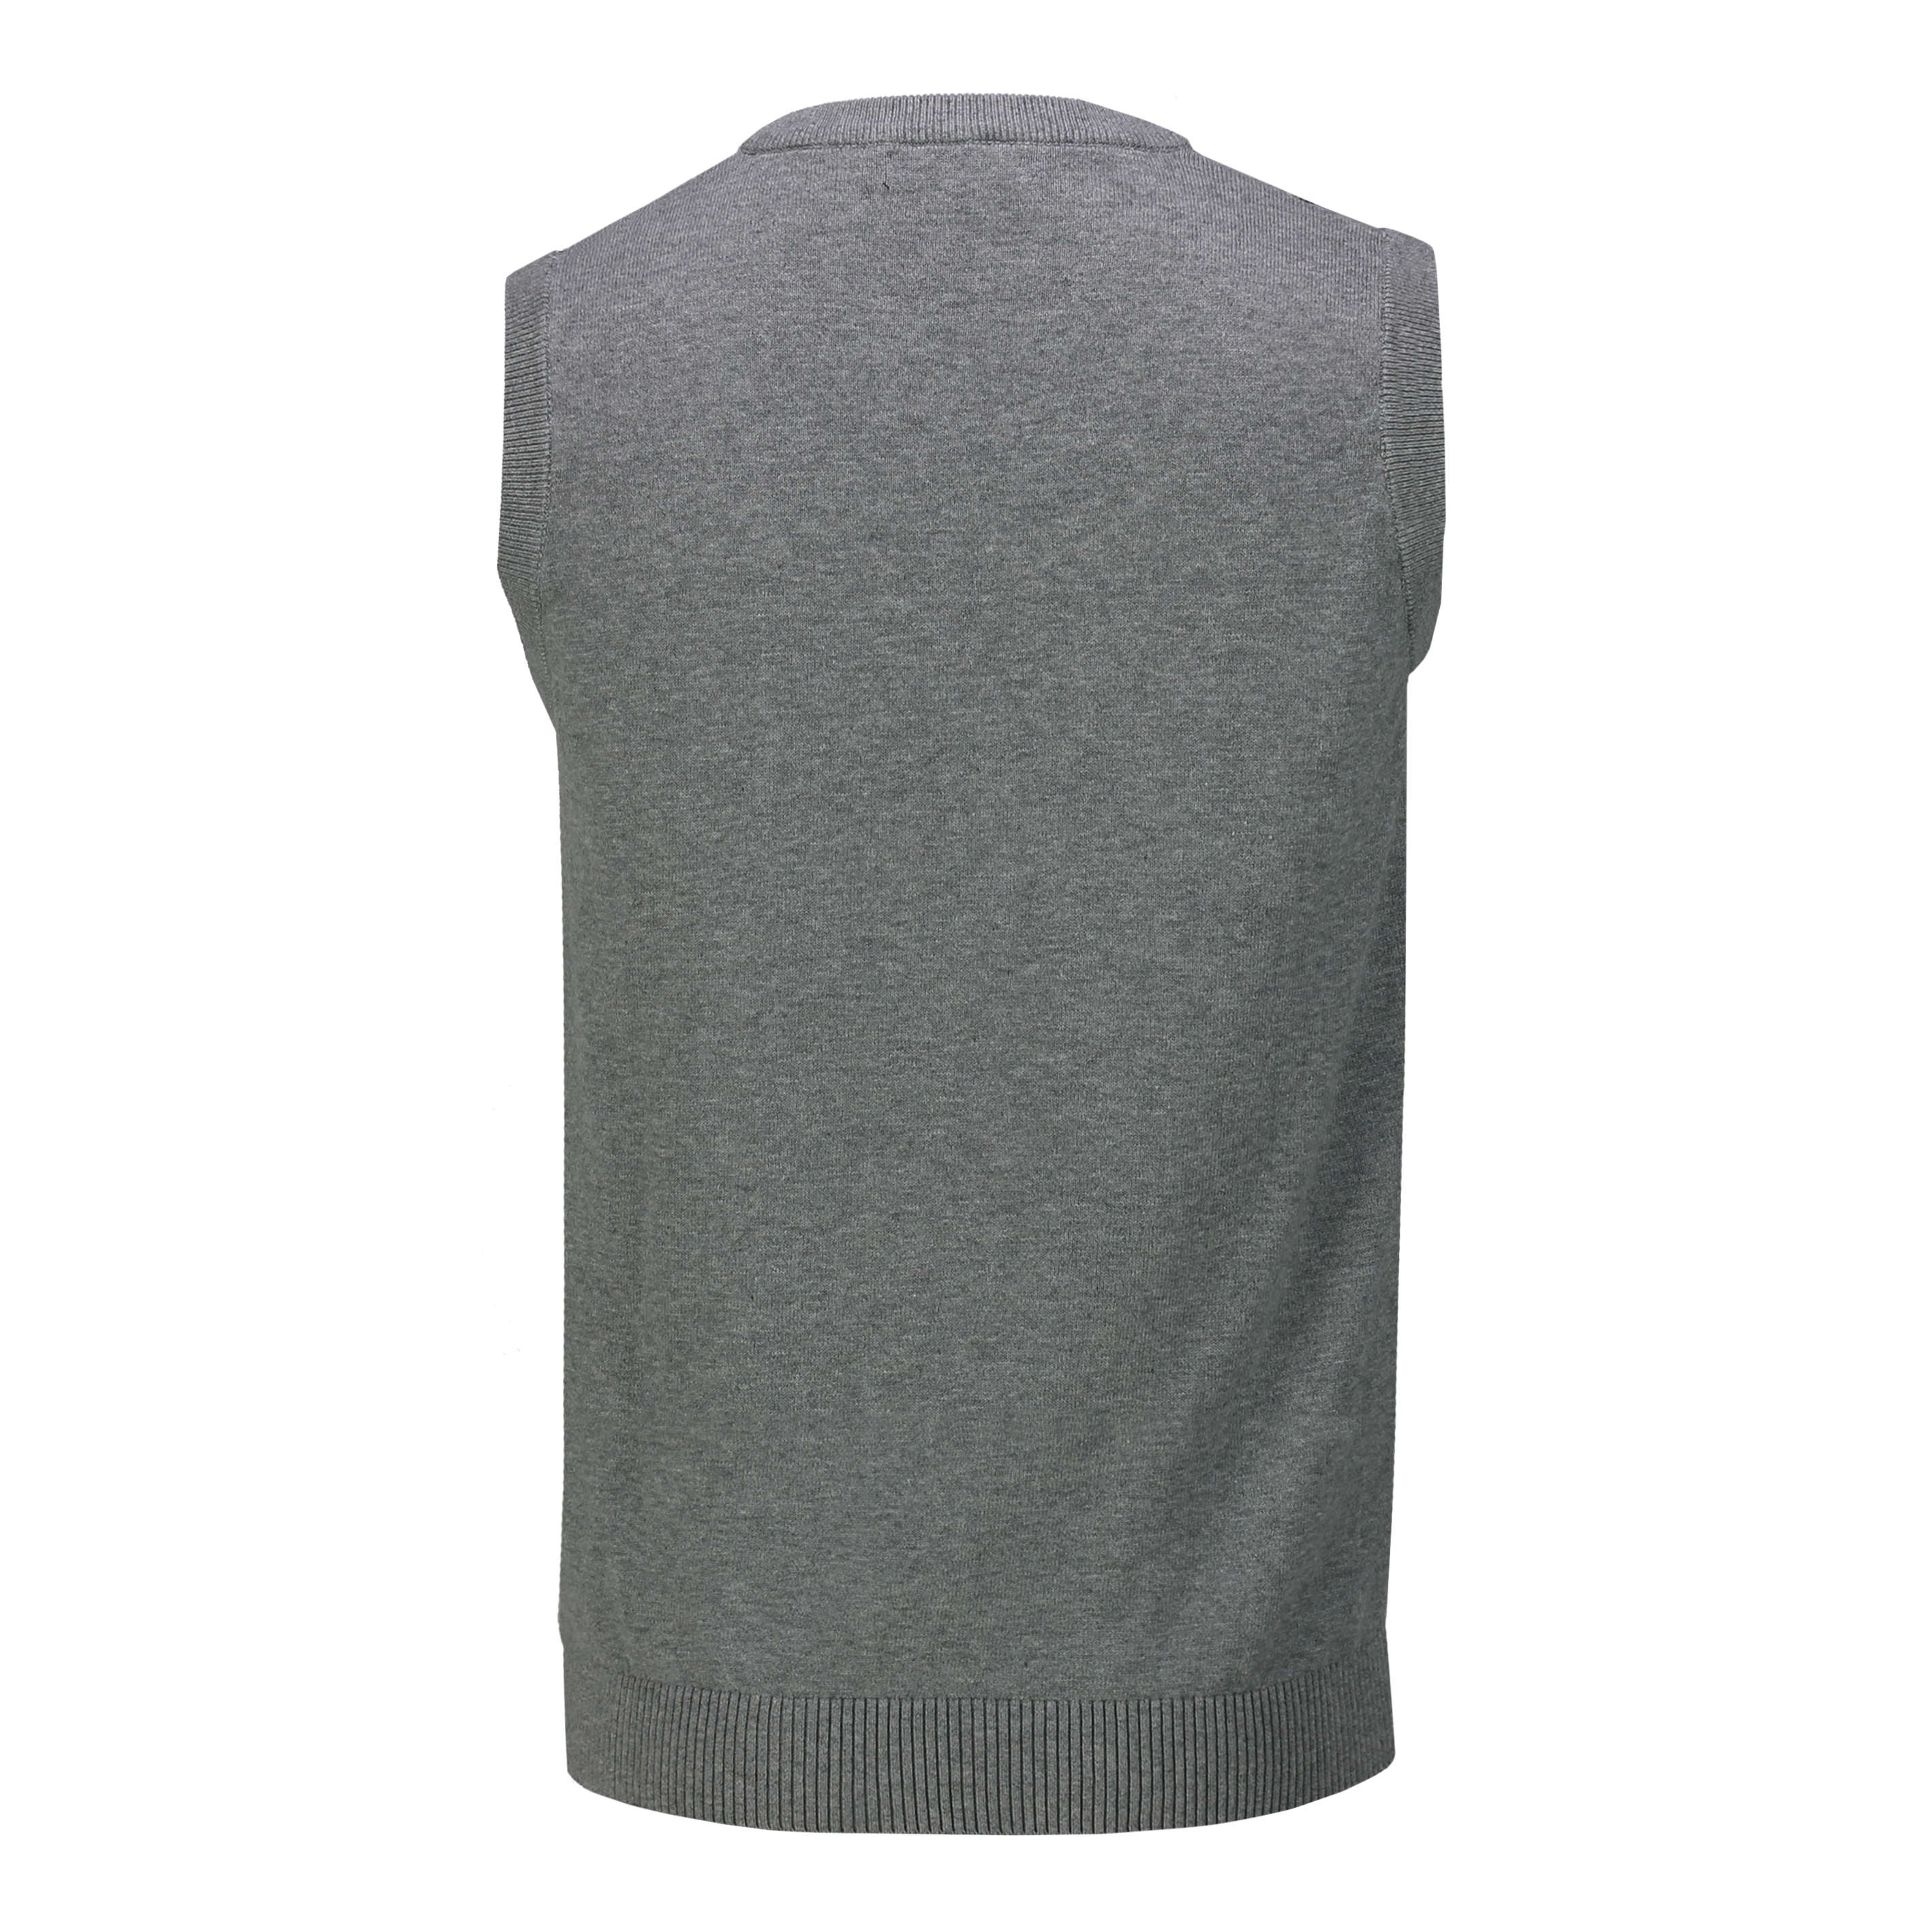 Sleeveless Argyle Golf V Neck Light Grey Jumper Vest